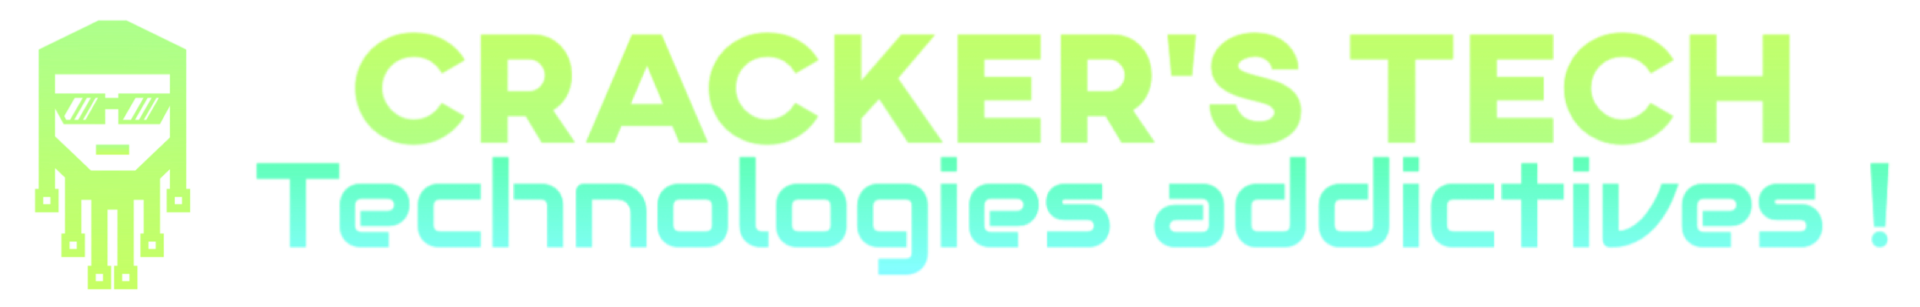 Cracker's Tech large logo